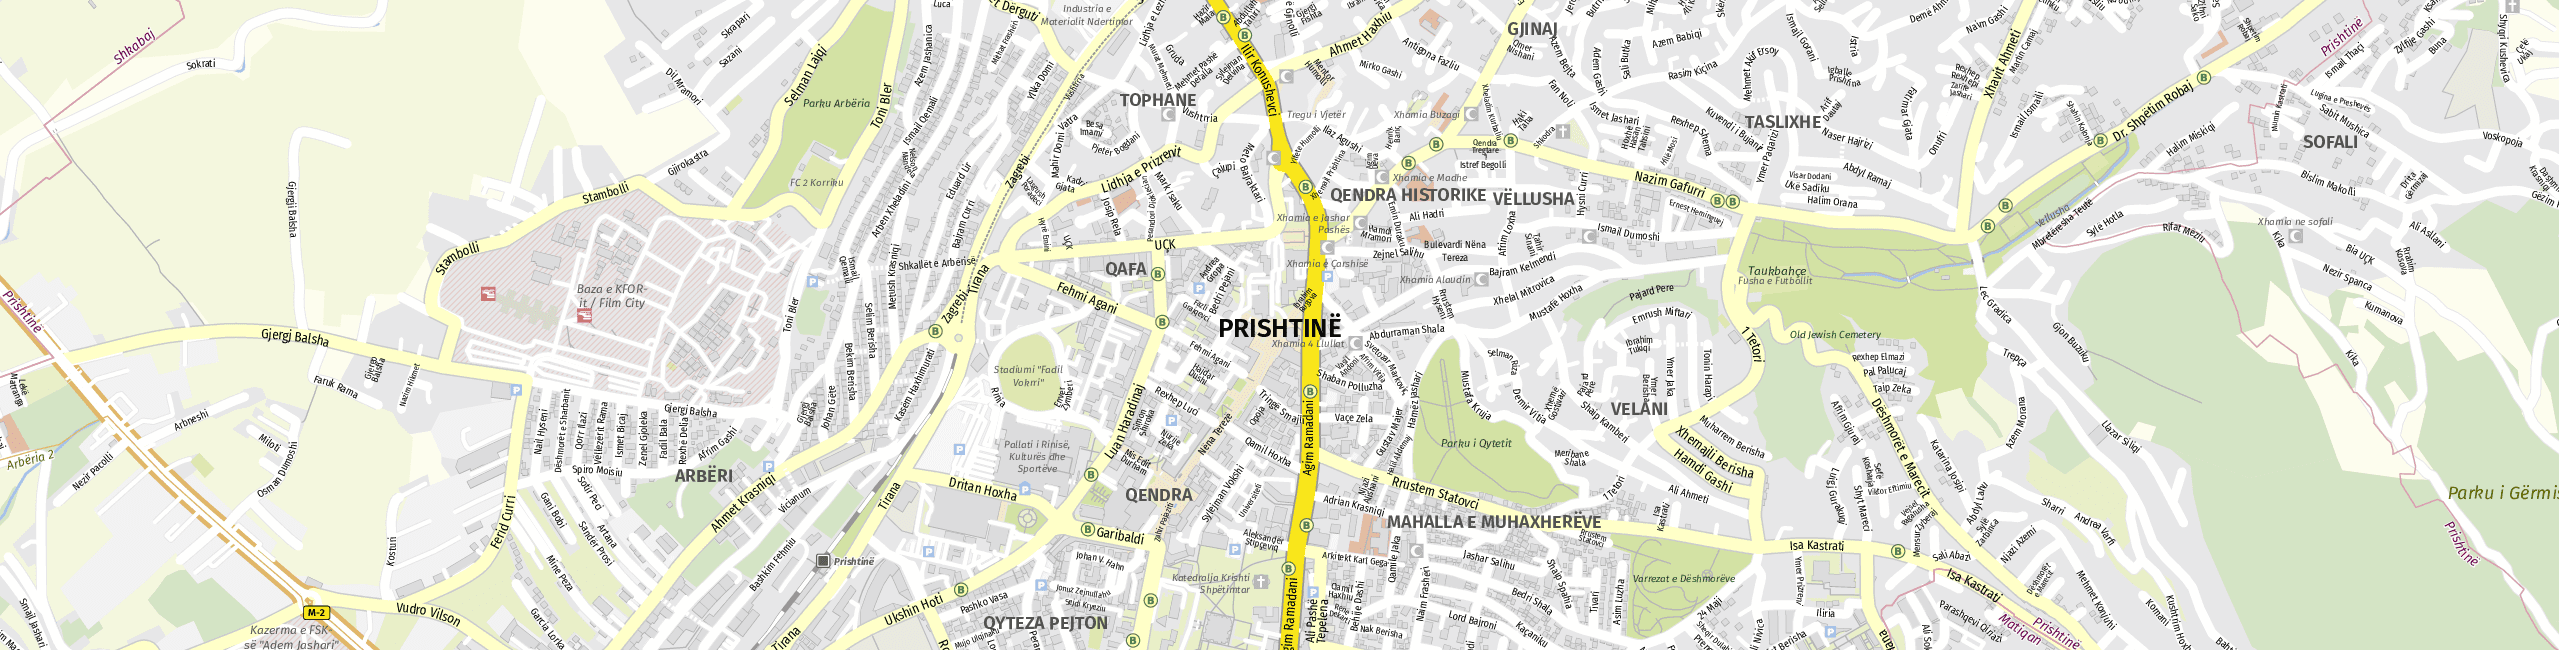 Stadtplan Pristina zum Downloaden.